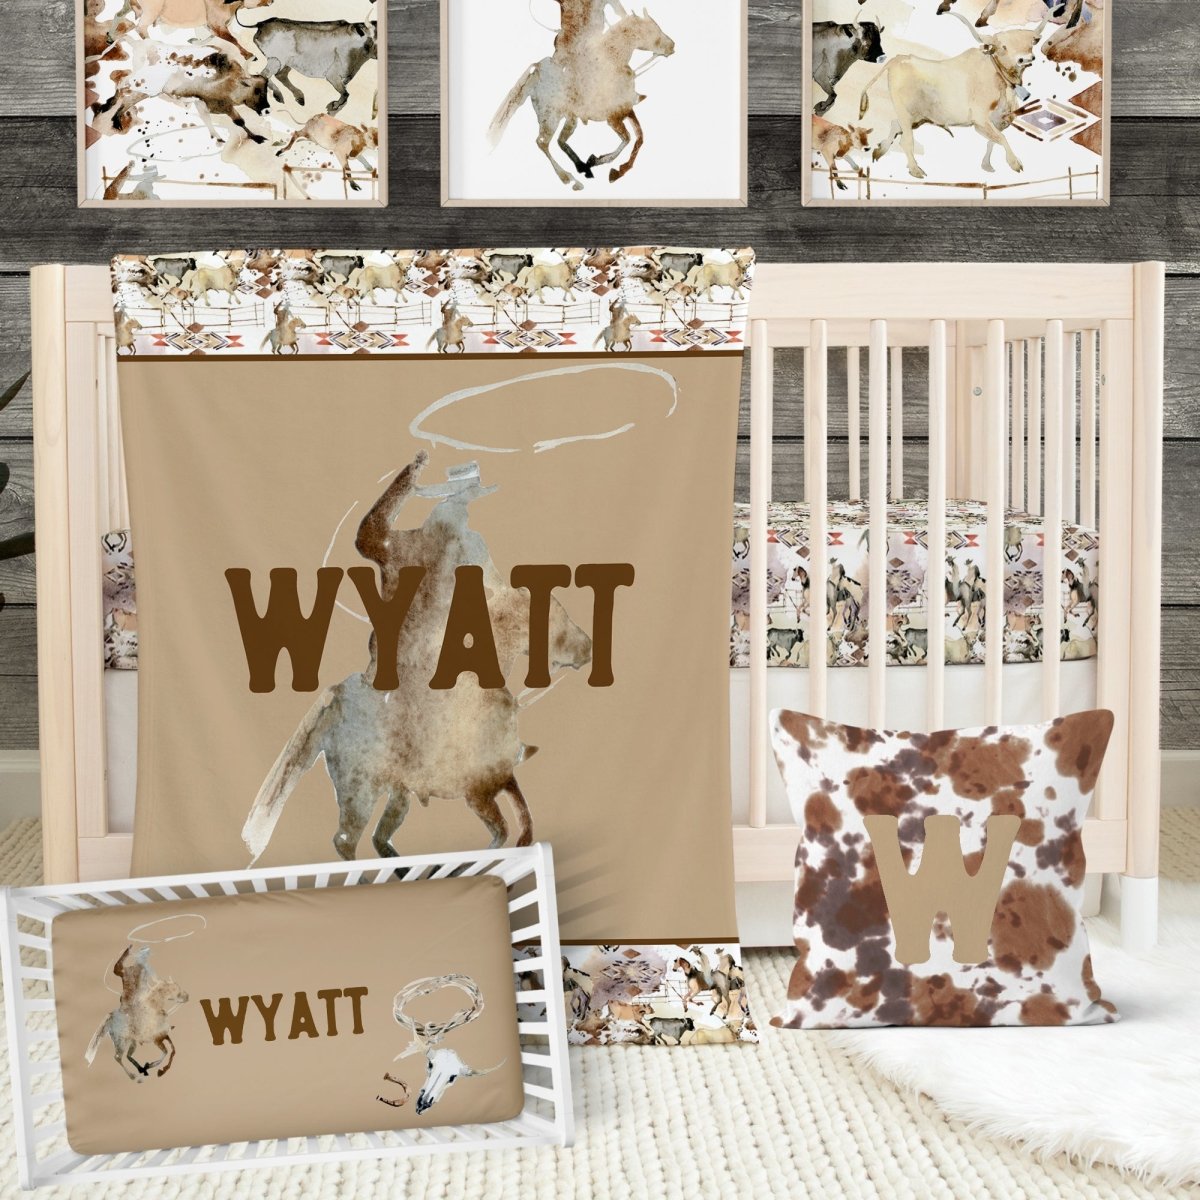 Wild West Cowboy Crib Sheet - gender_boy, Theme_Farm, Theme_Southwestern